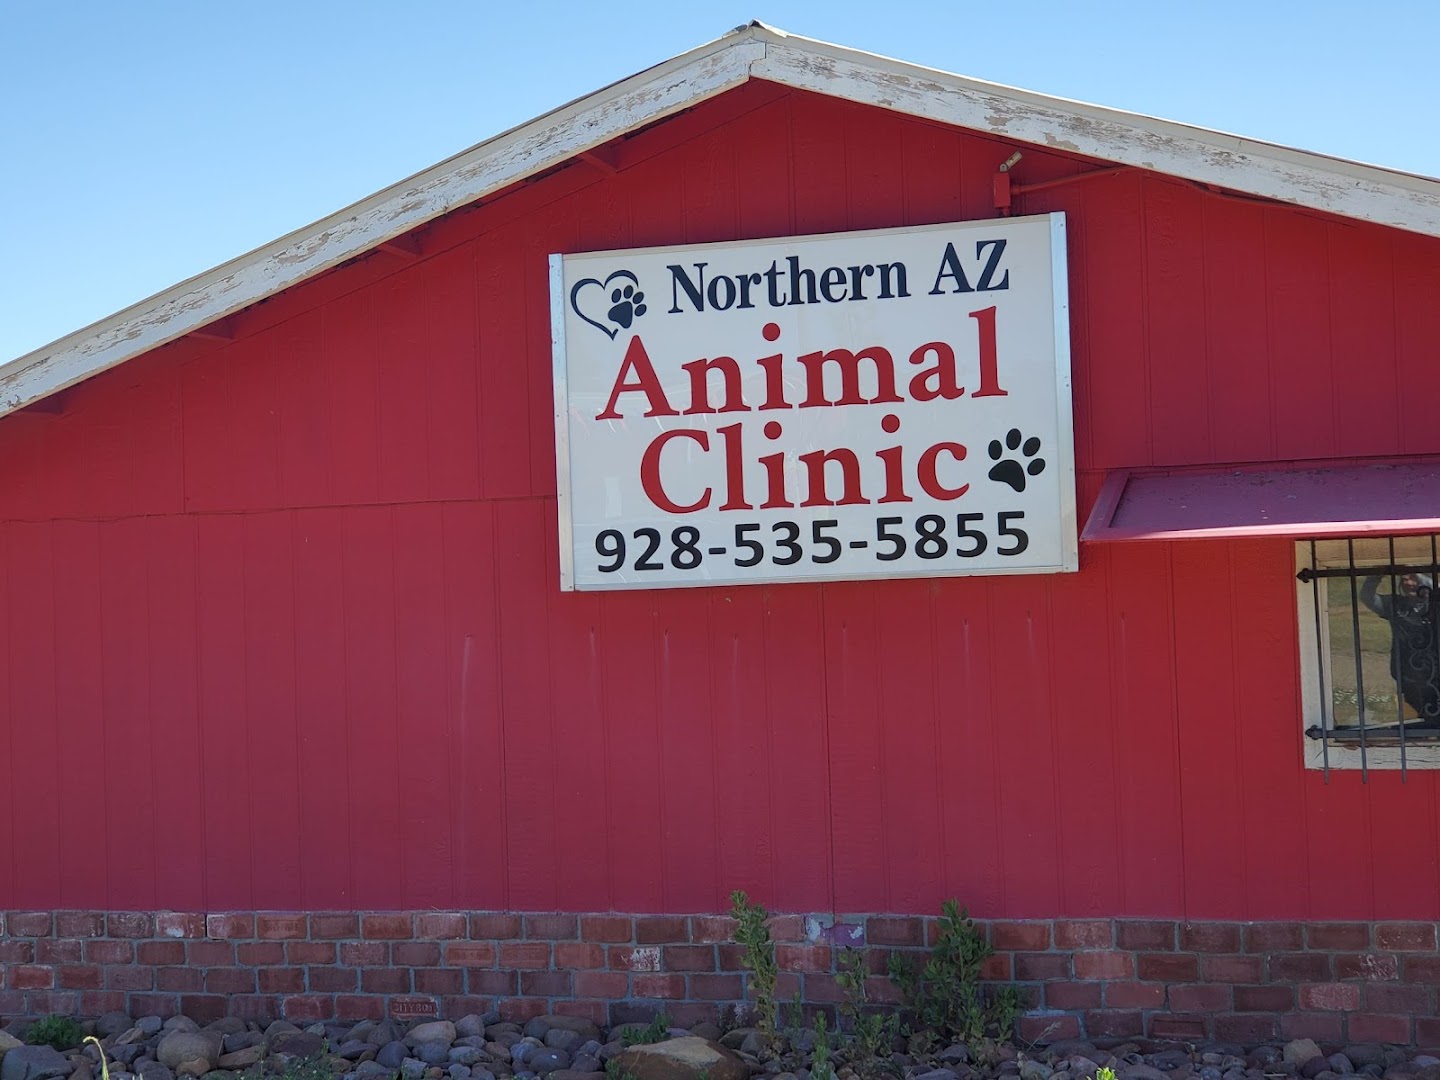 Northern AZ Animal Clinic